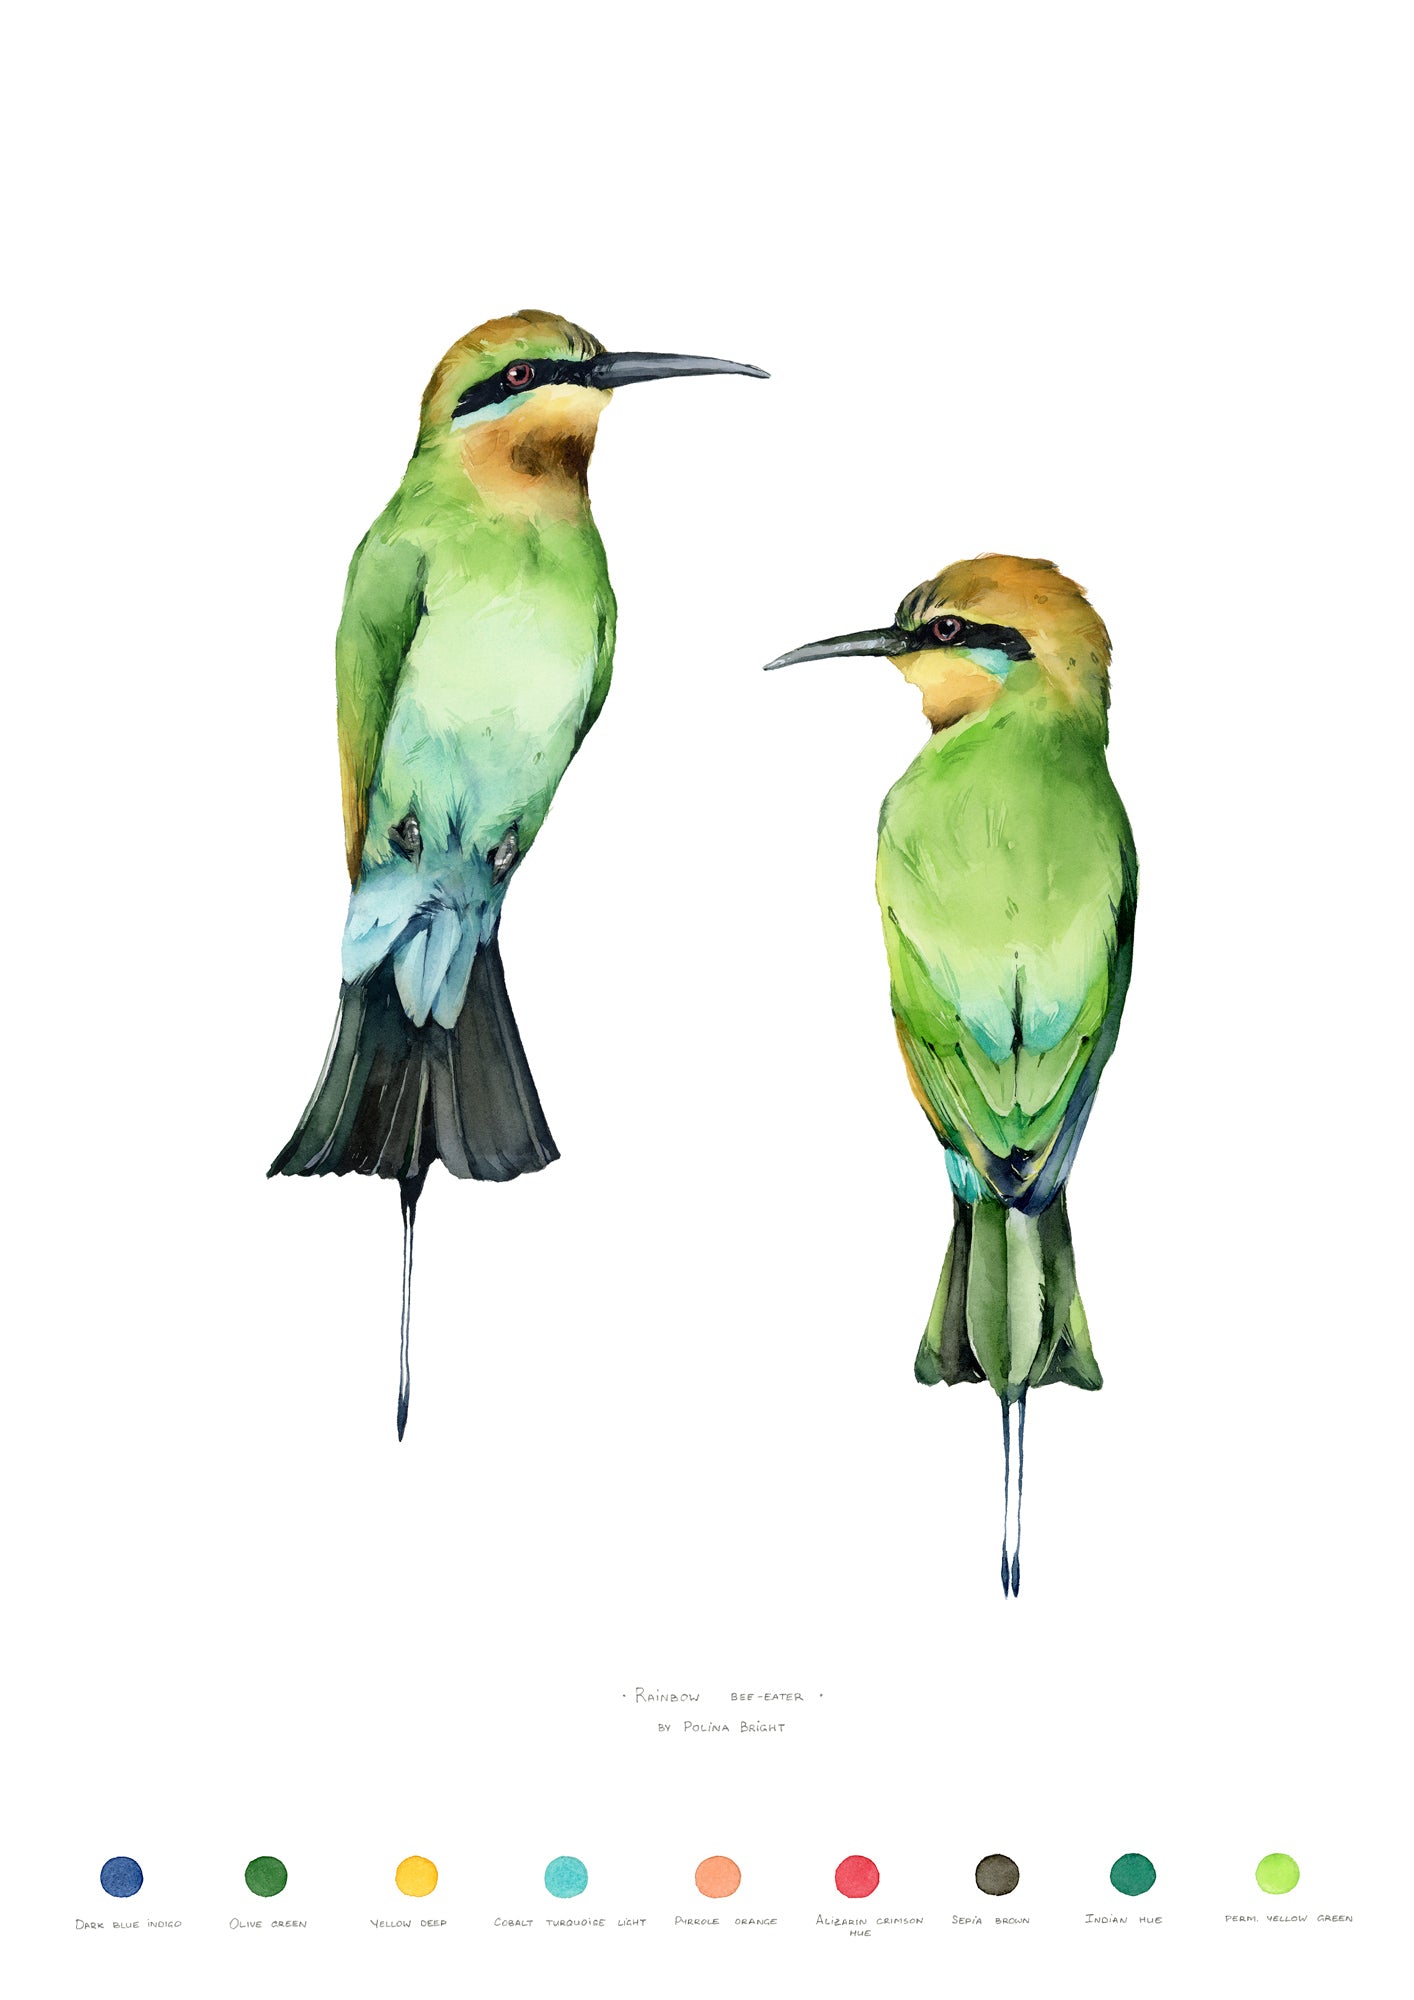 Rainbow bee-eaters by Polina Bright